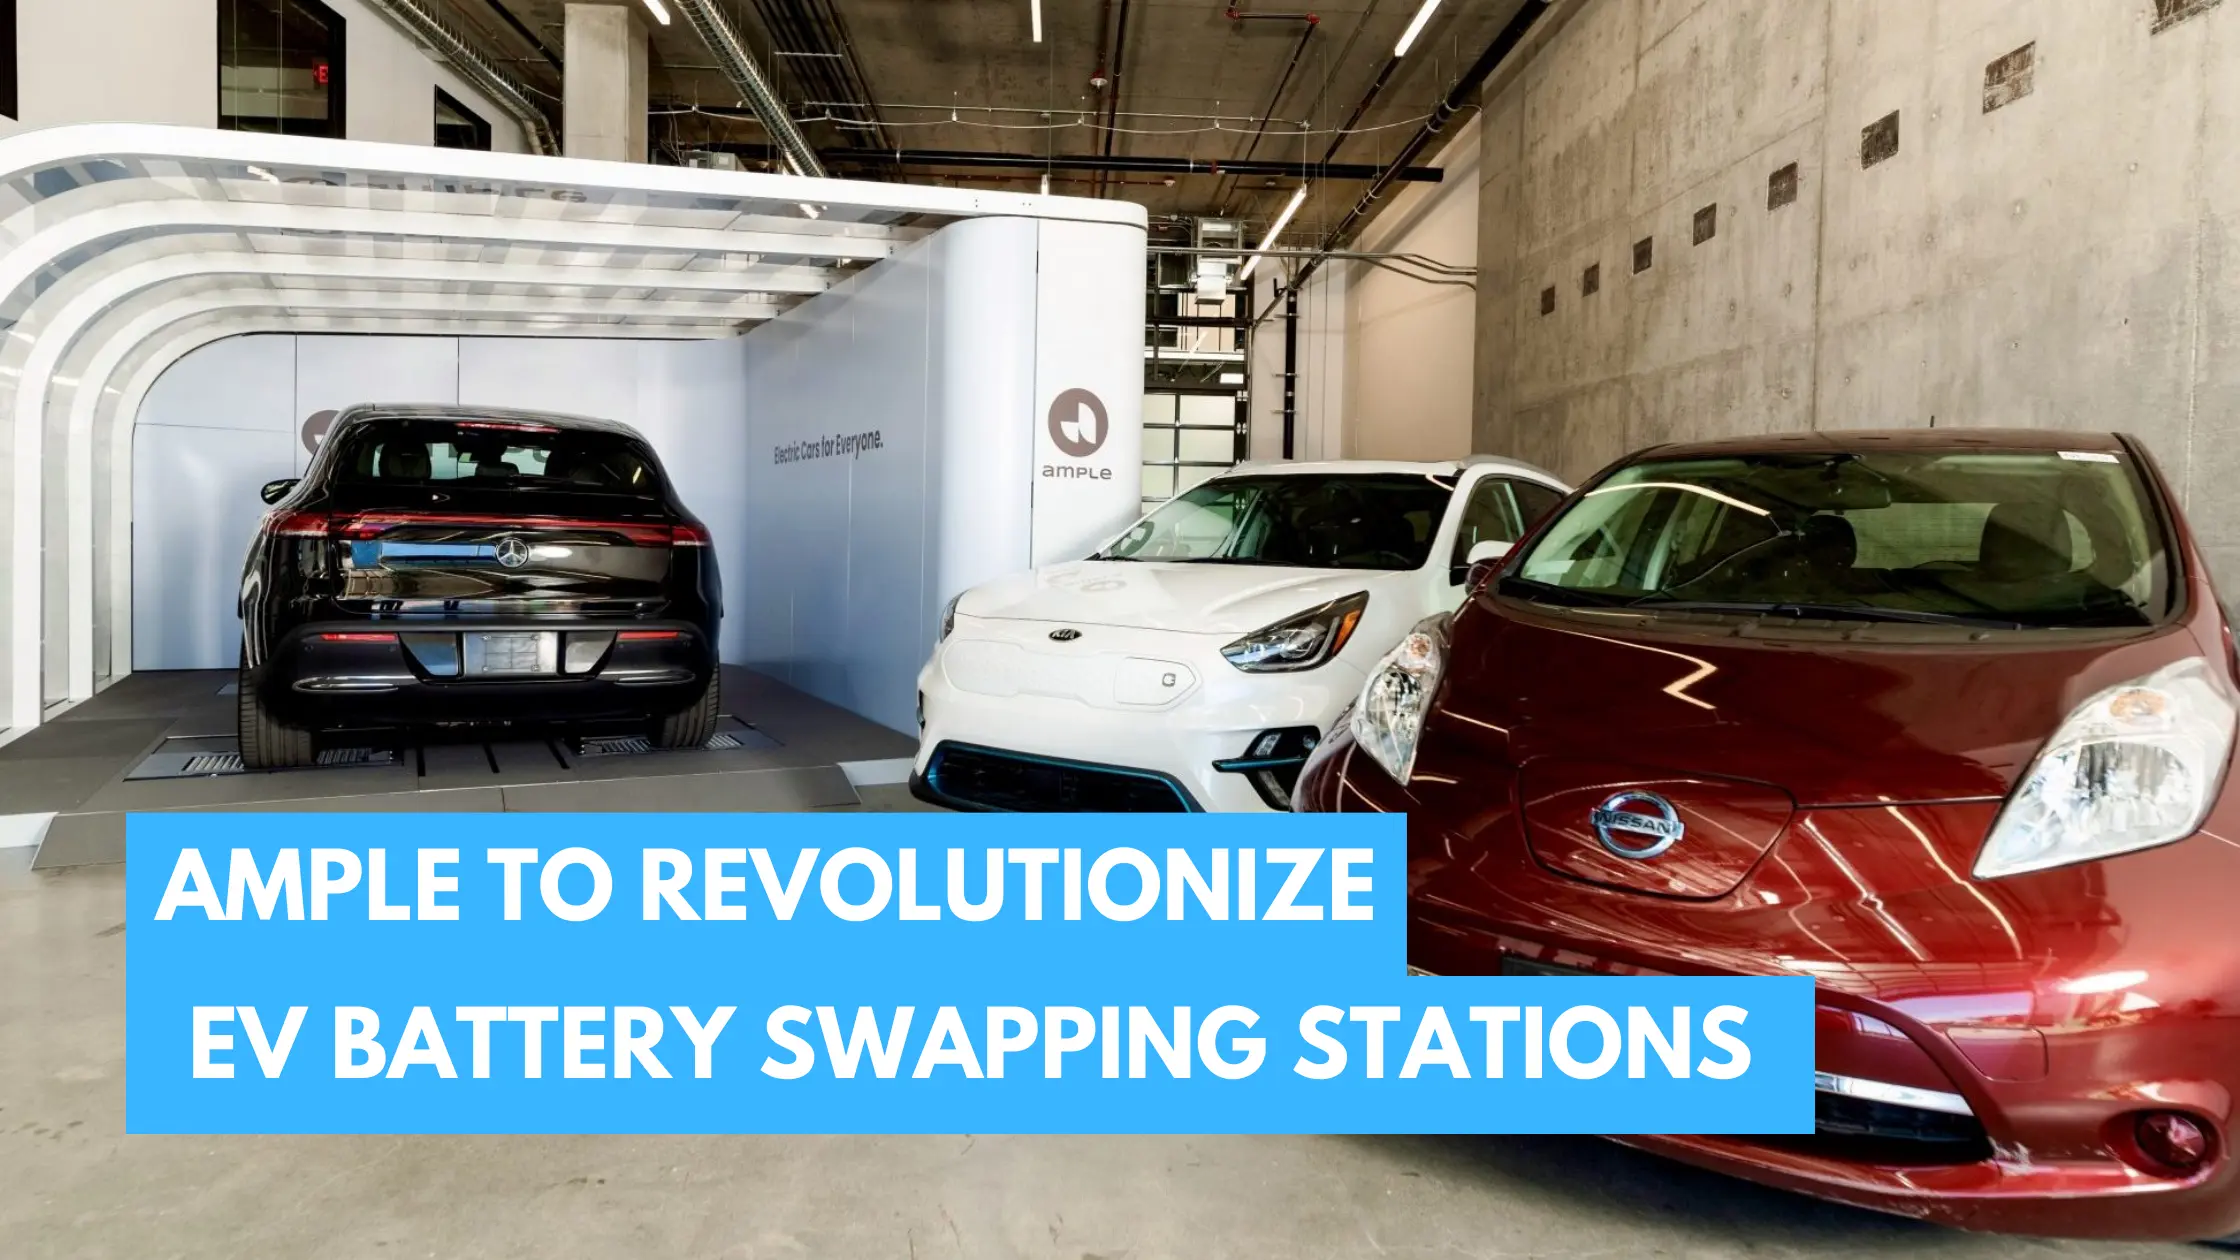 Ample Unveils Revolutionary 5Minute EV Battery Swaps